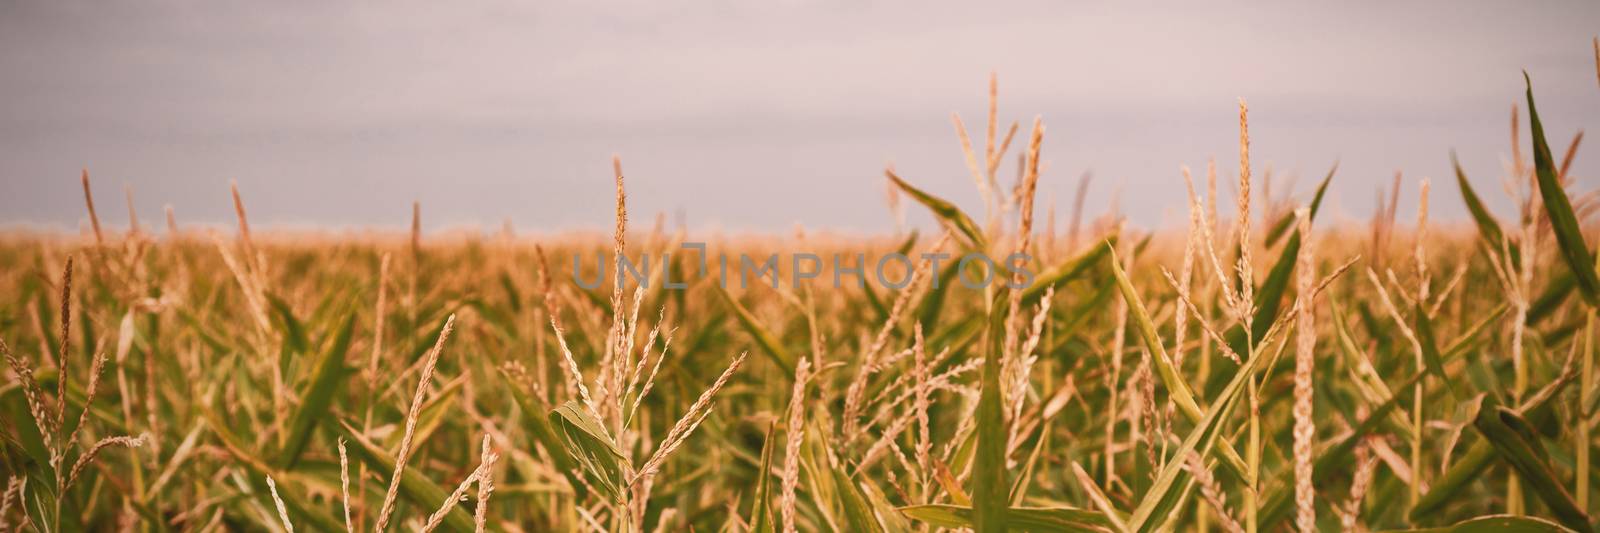 Field crops on a sunny day by Wavebreakmedia